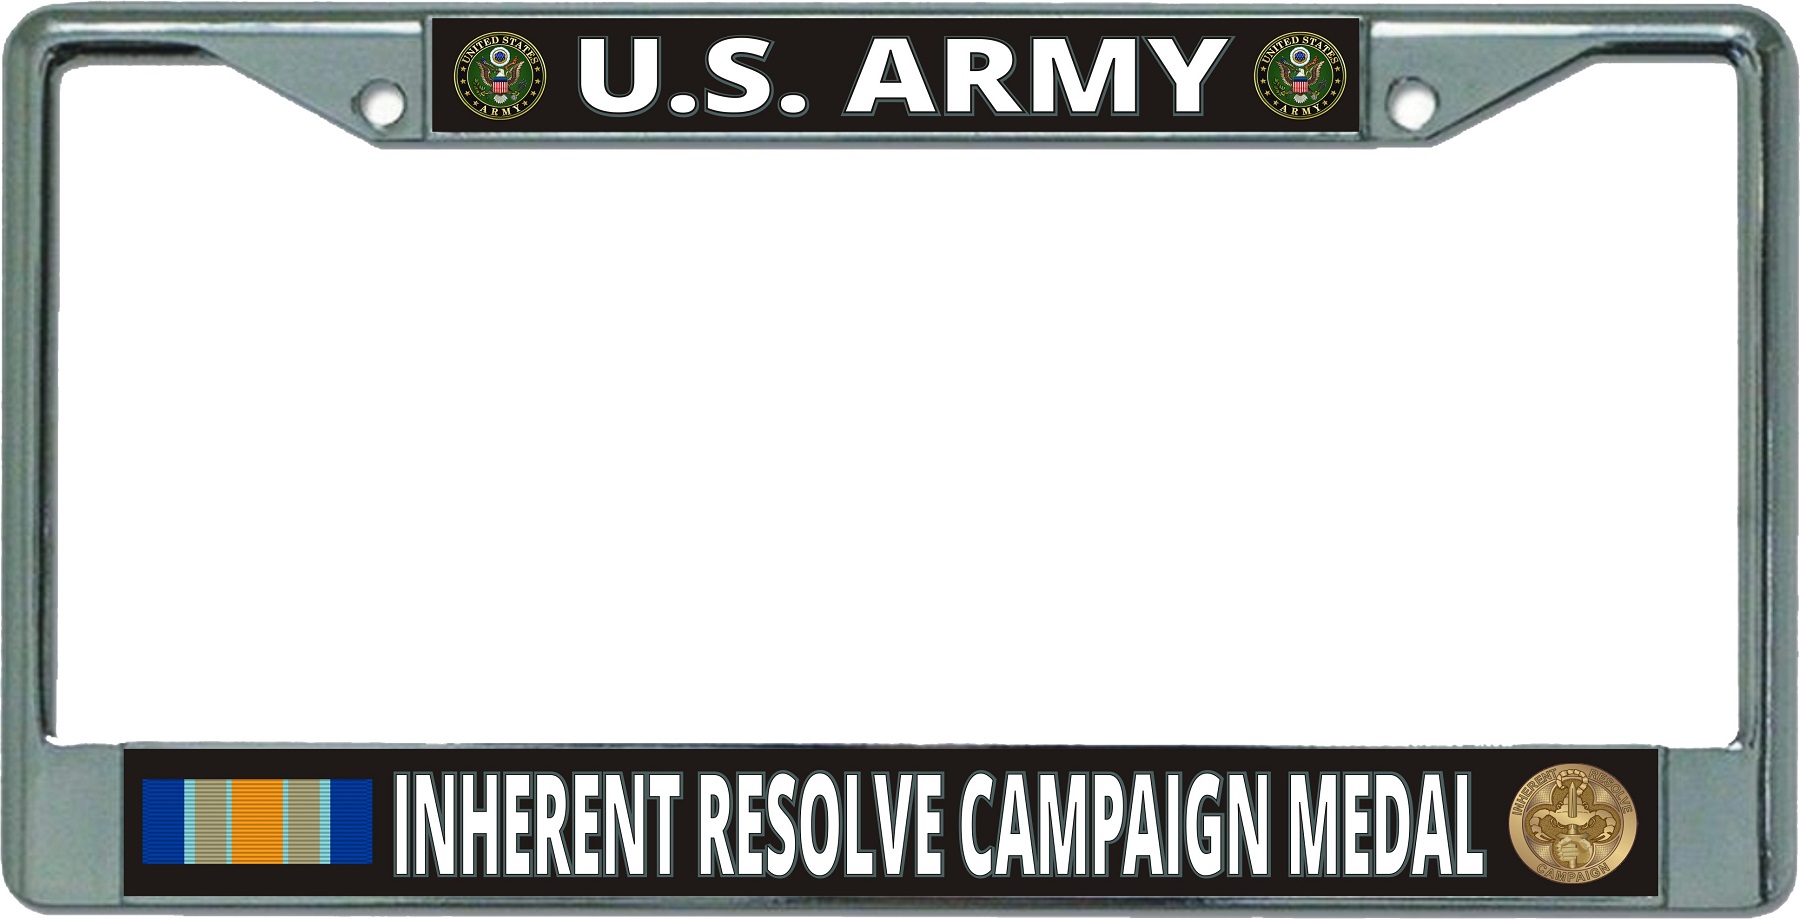 U.S. Army Inherent Resolve Campaign Medal Chrome License Plate FRAME